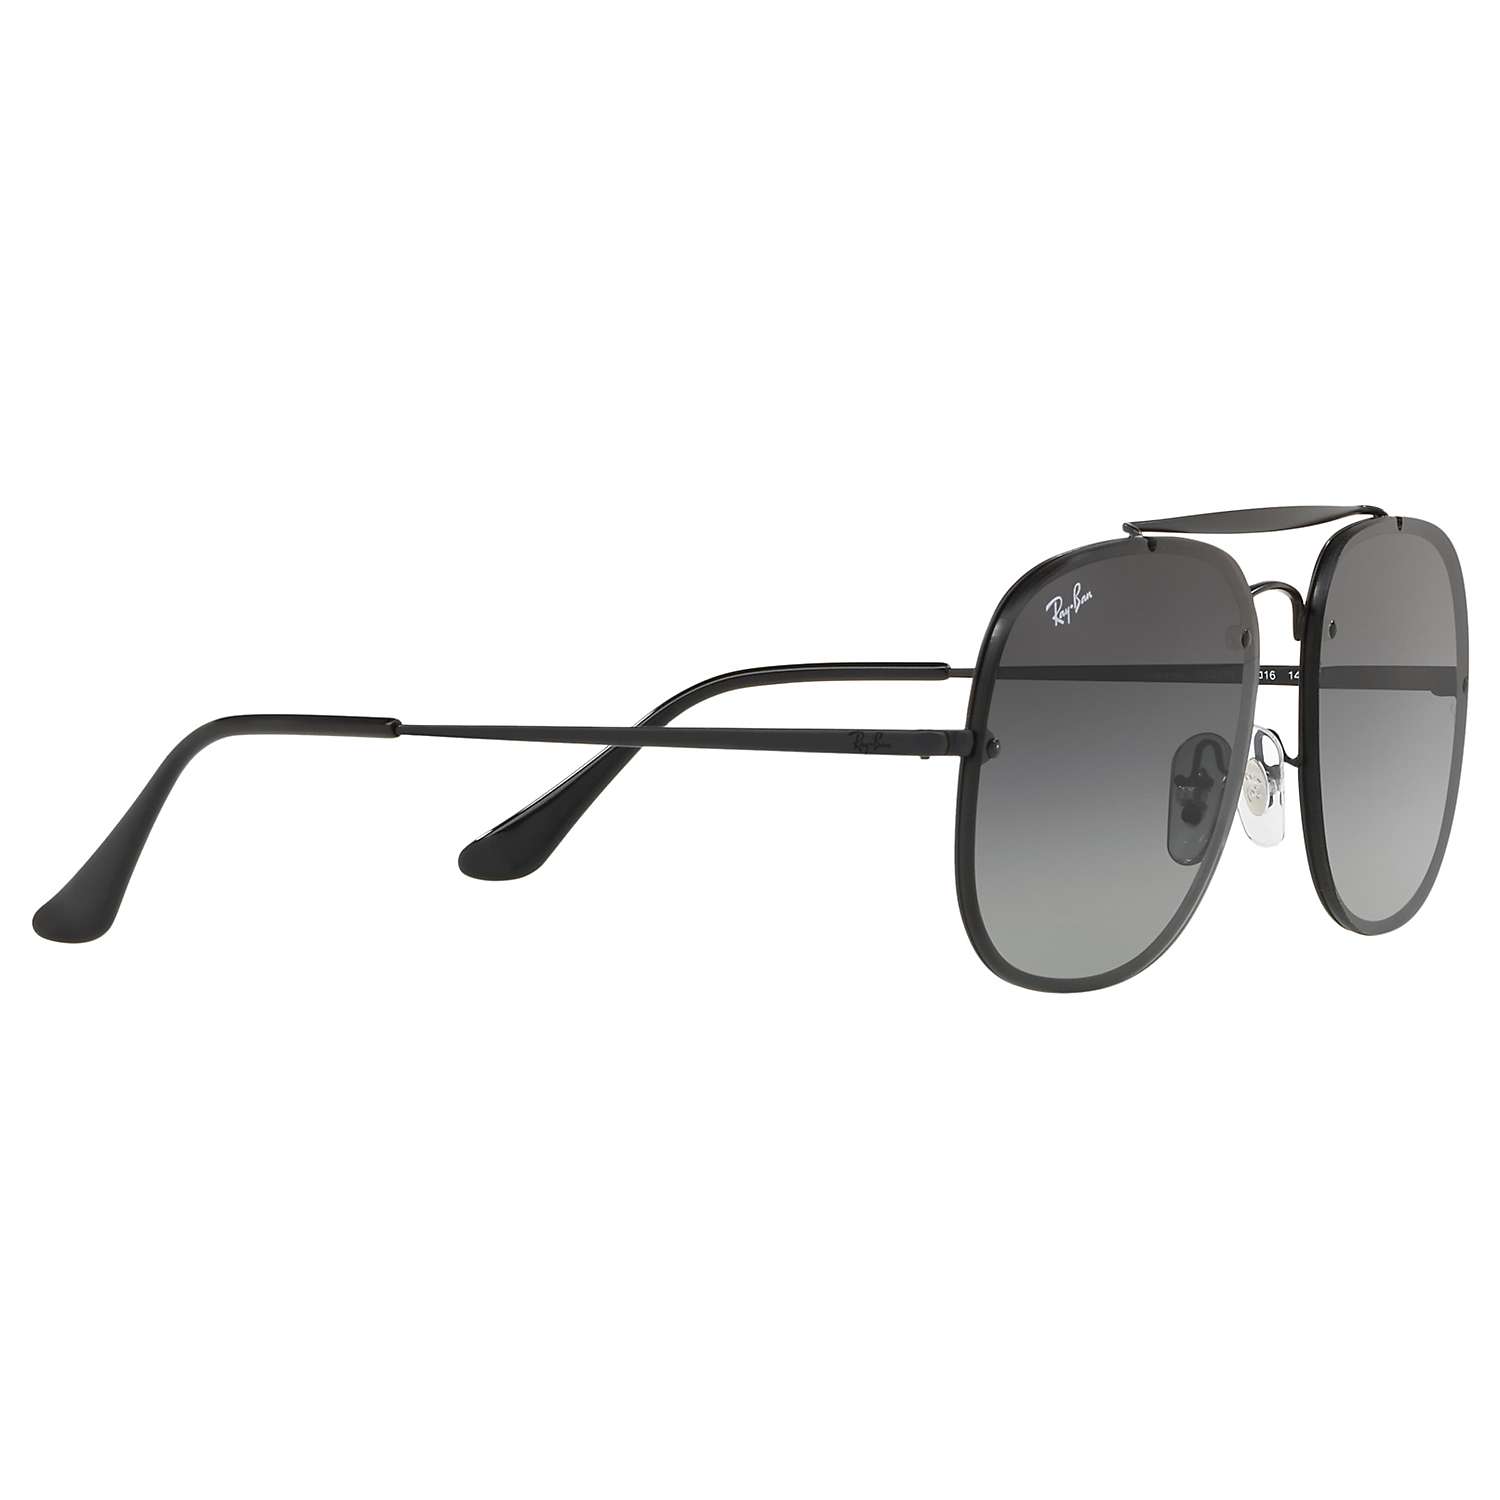 Buy Ray-Ban RB3583N Unisex Blaze General Square Sunglasses, Black/Grey Gradient Online at johnlewis.com